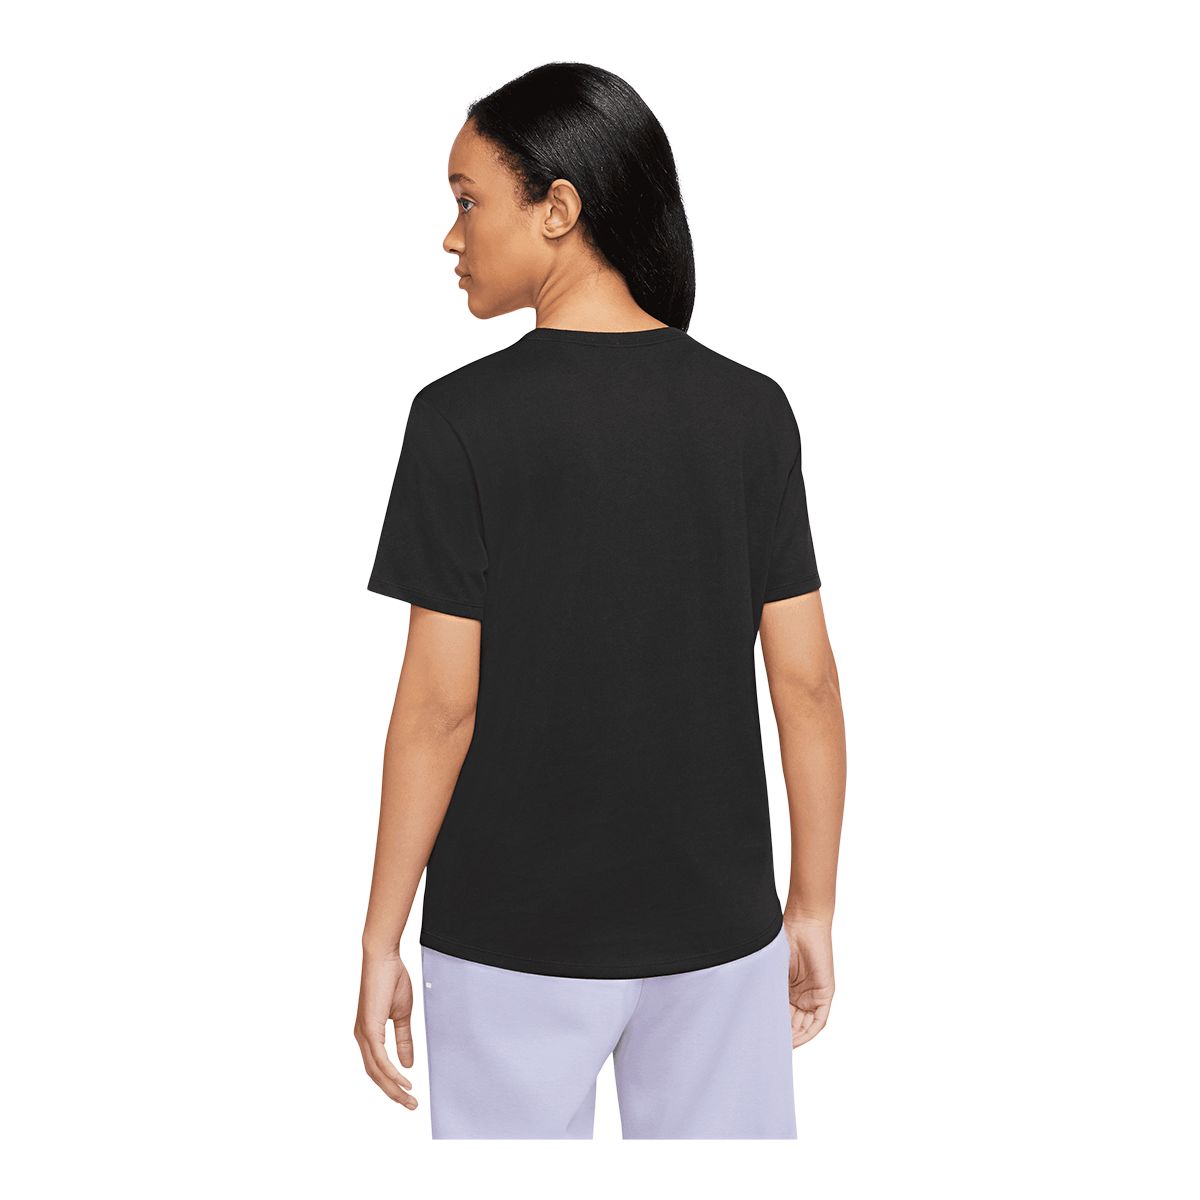 Nike Sportswear Women's Dim D T Shirt